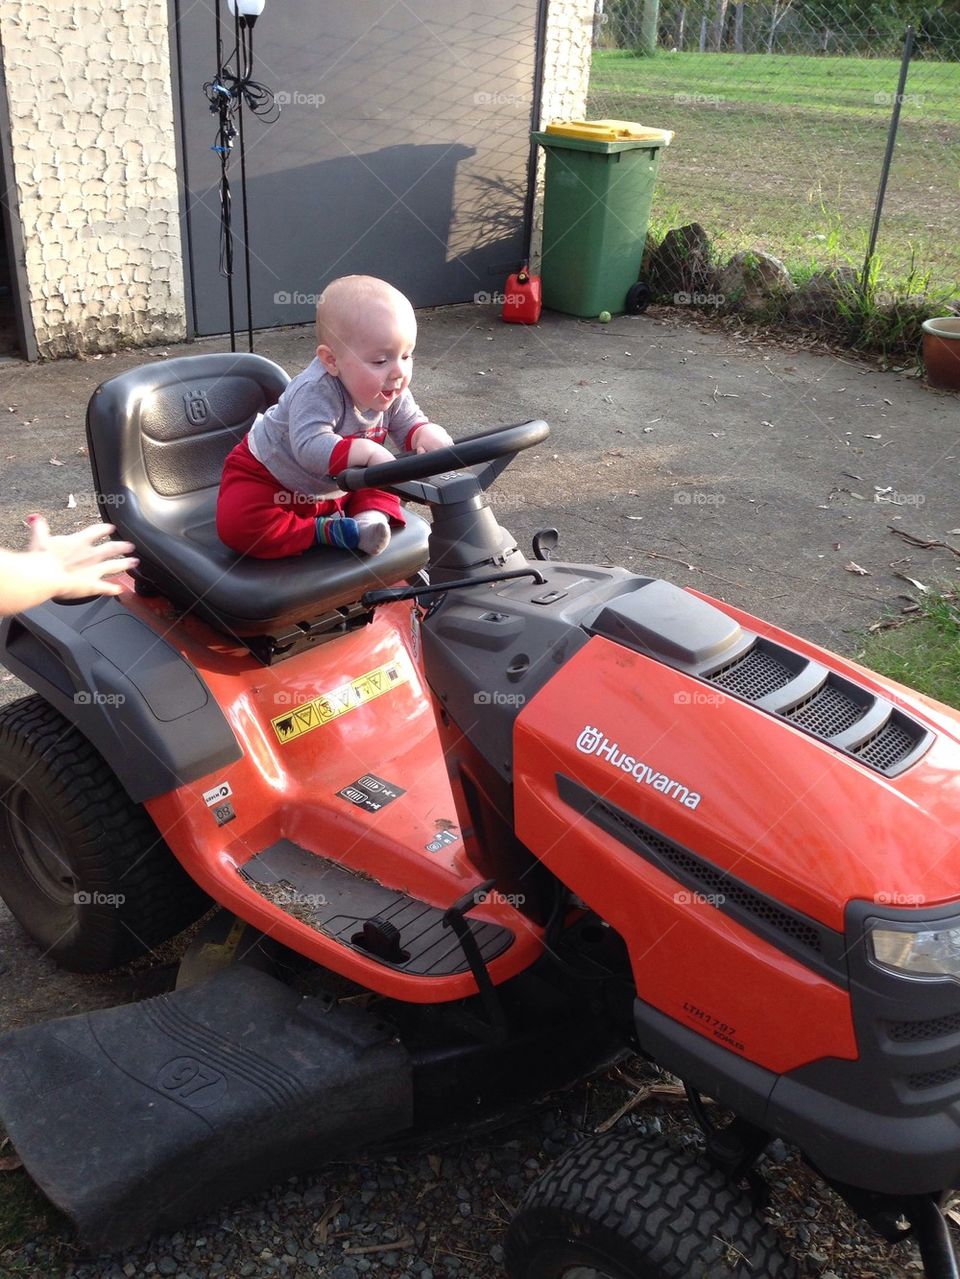 Baby having fun a lawnmower 